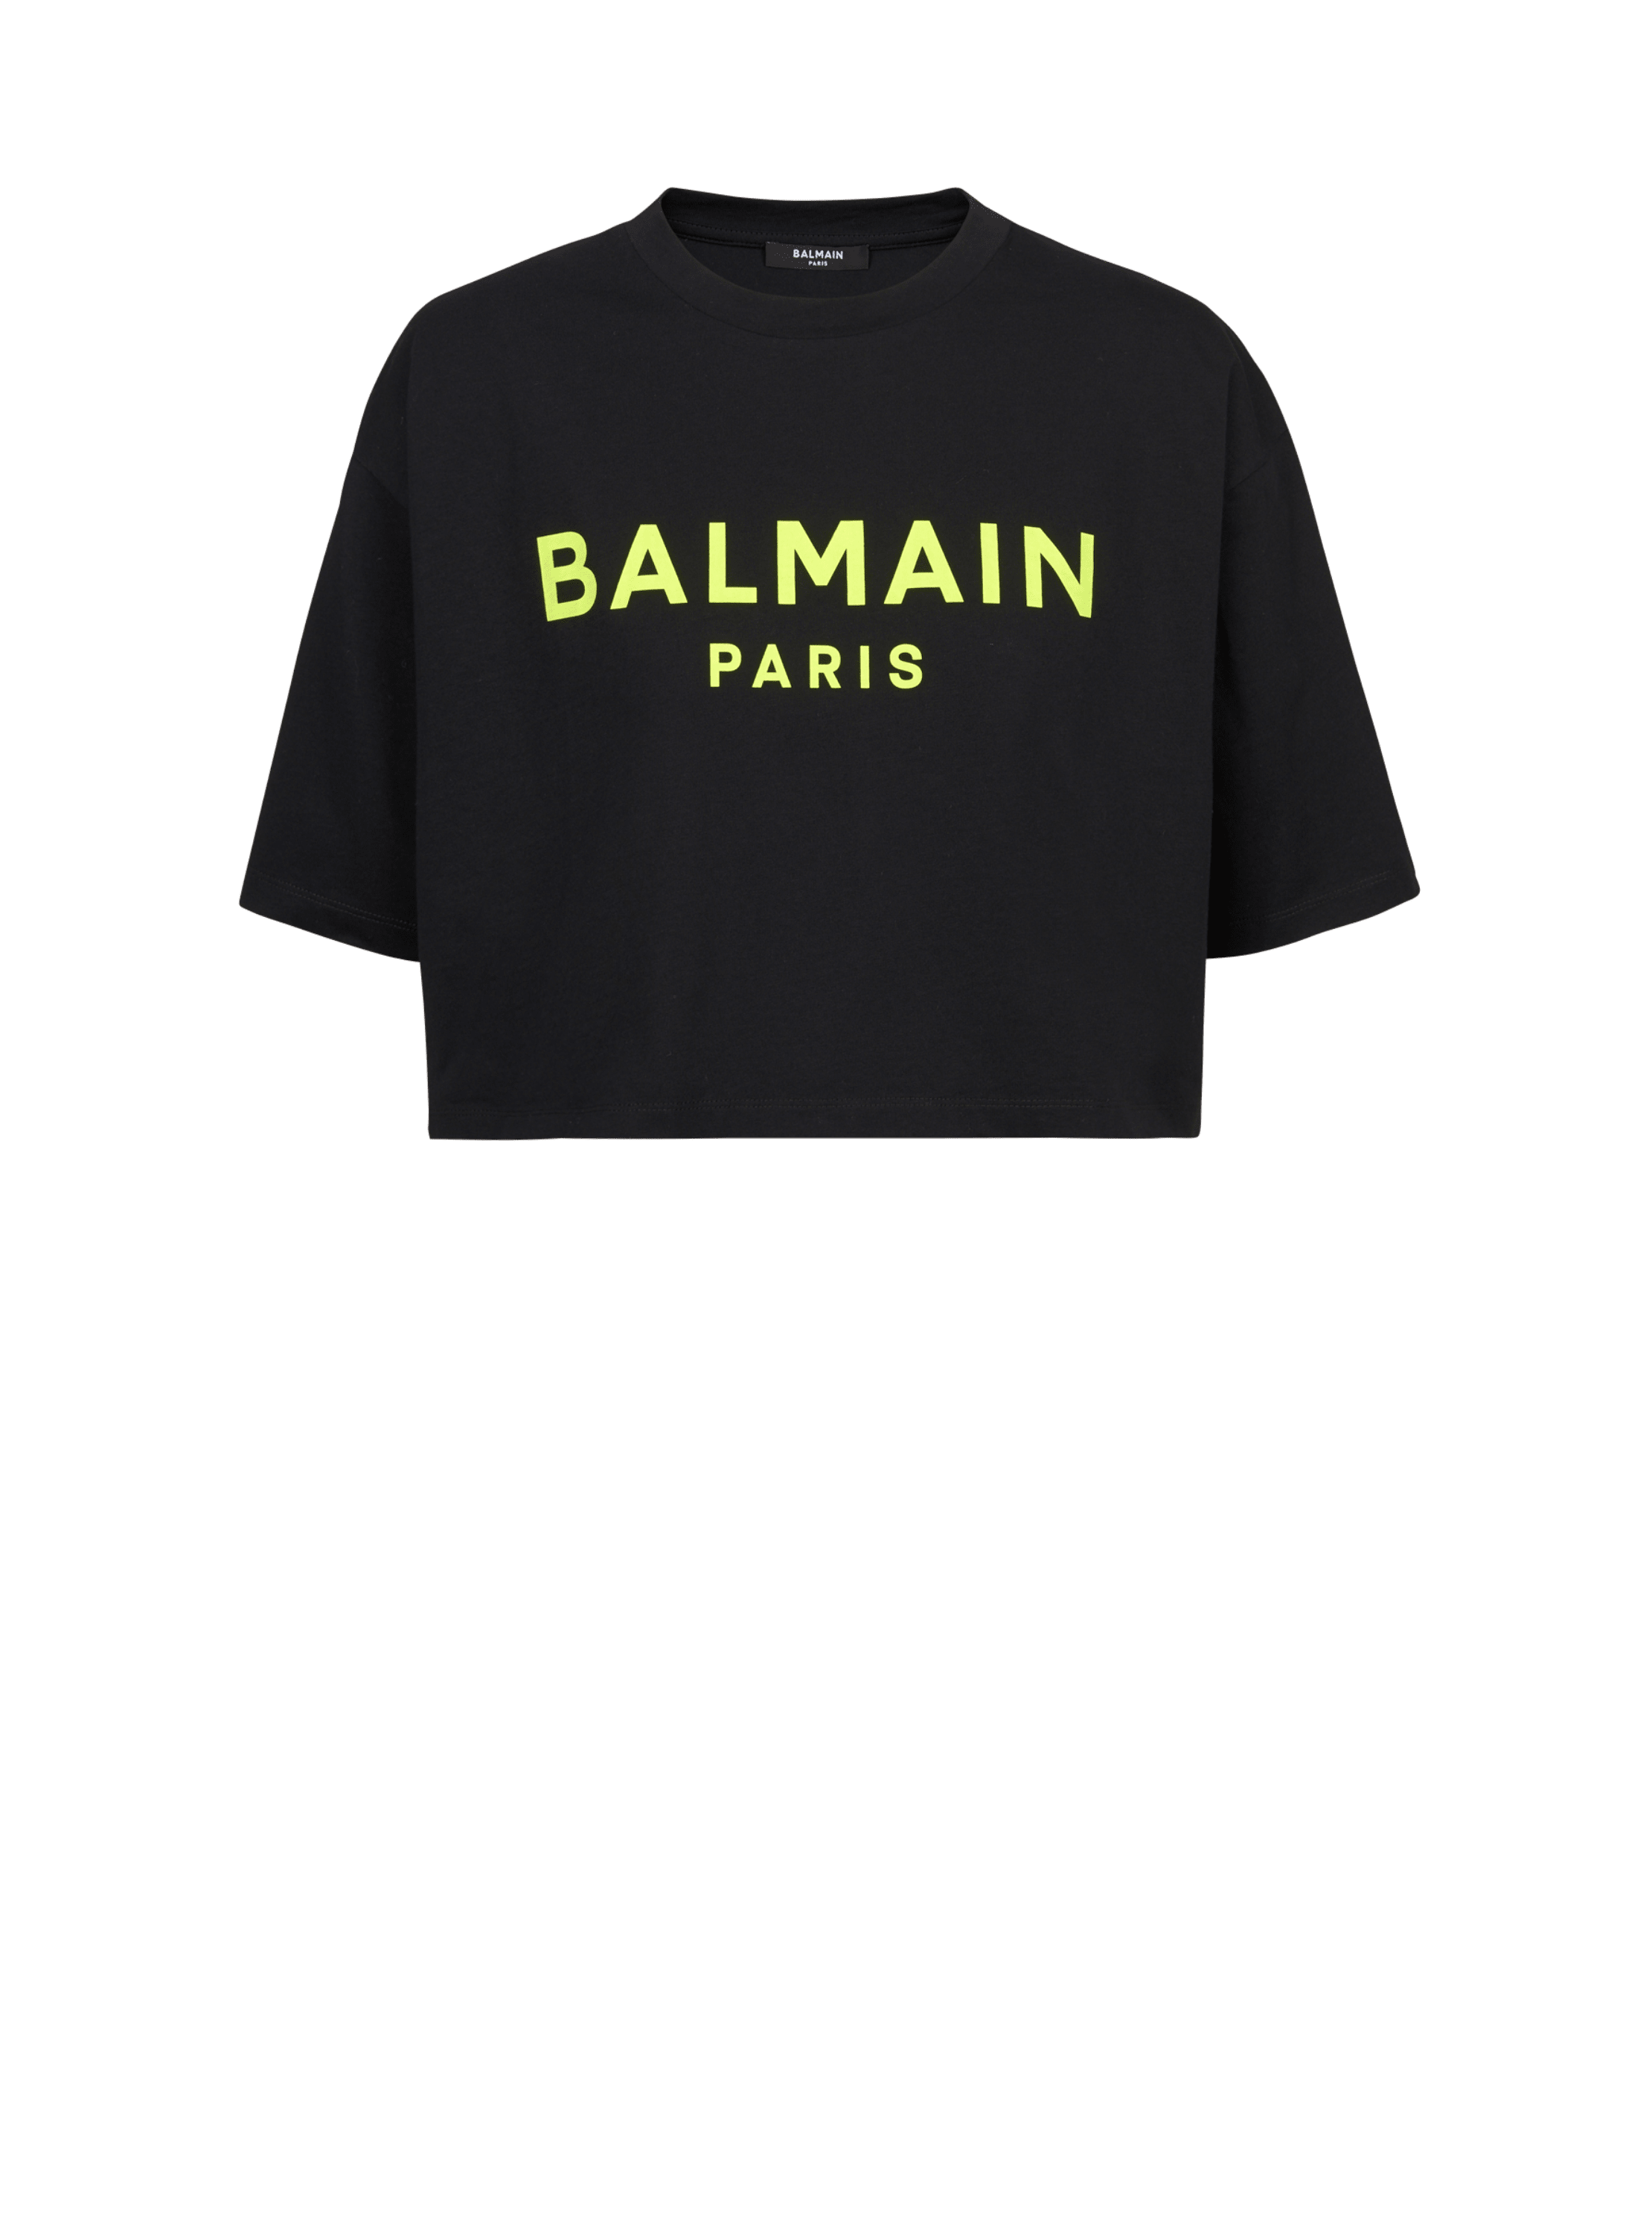 T-shirt court en coton imprimé logo Balmain, jaune, hi-res